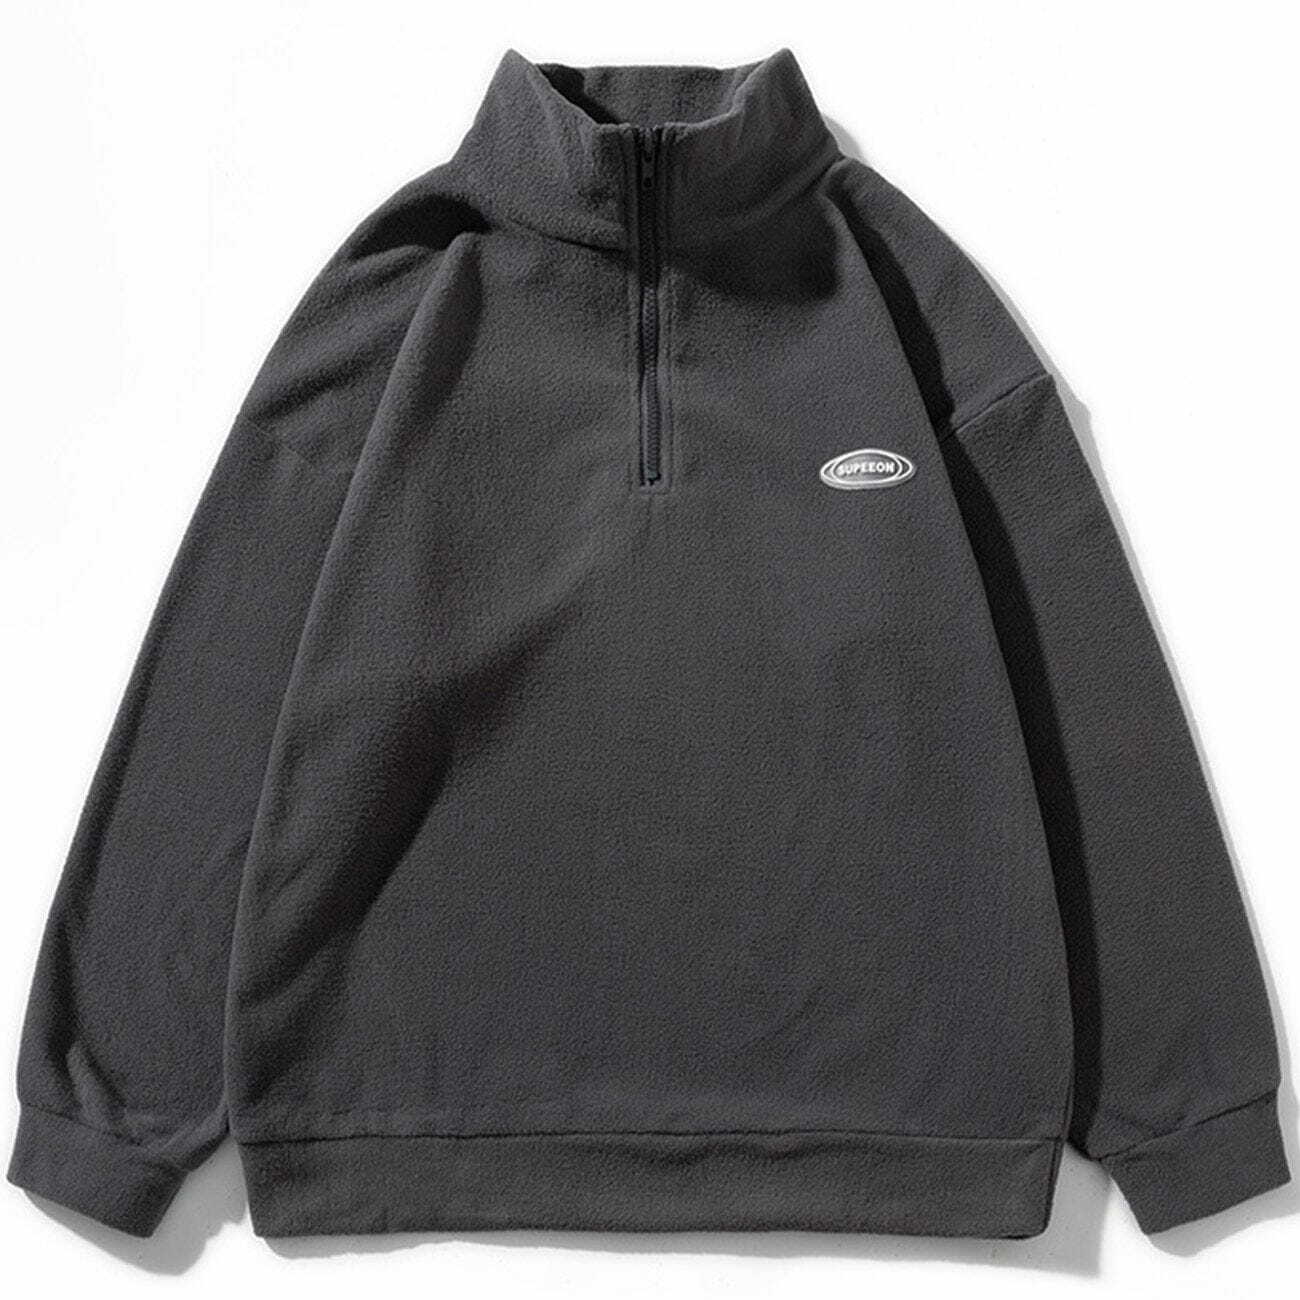 sleek lettered sweatshirt urban fashion essential 5526